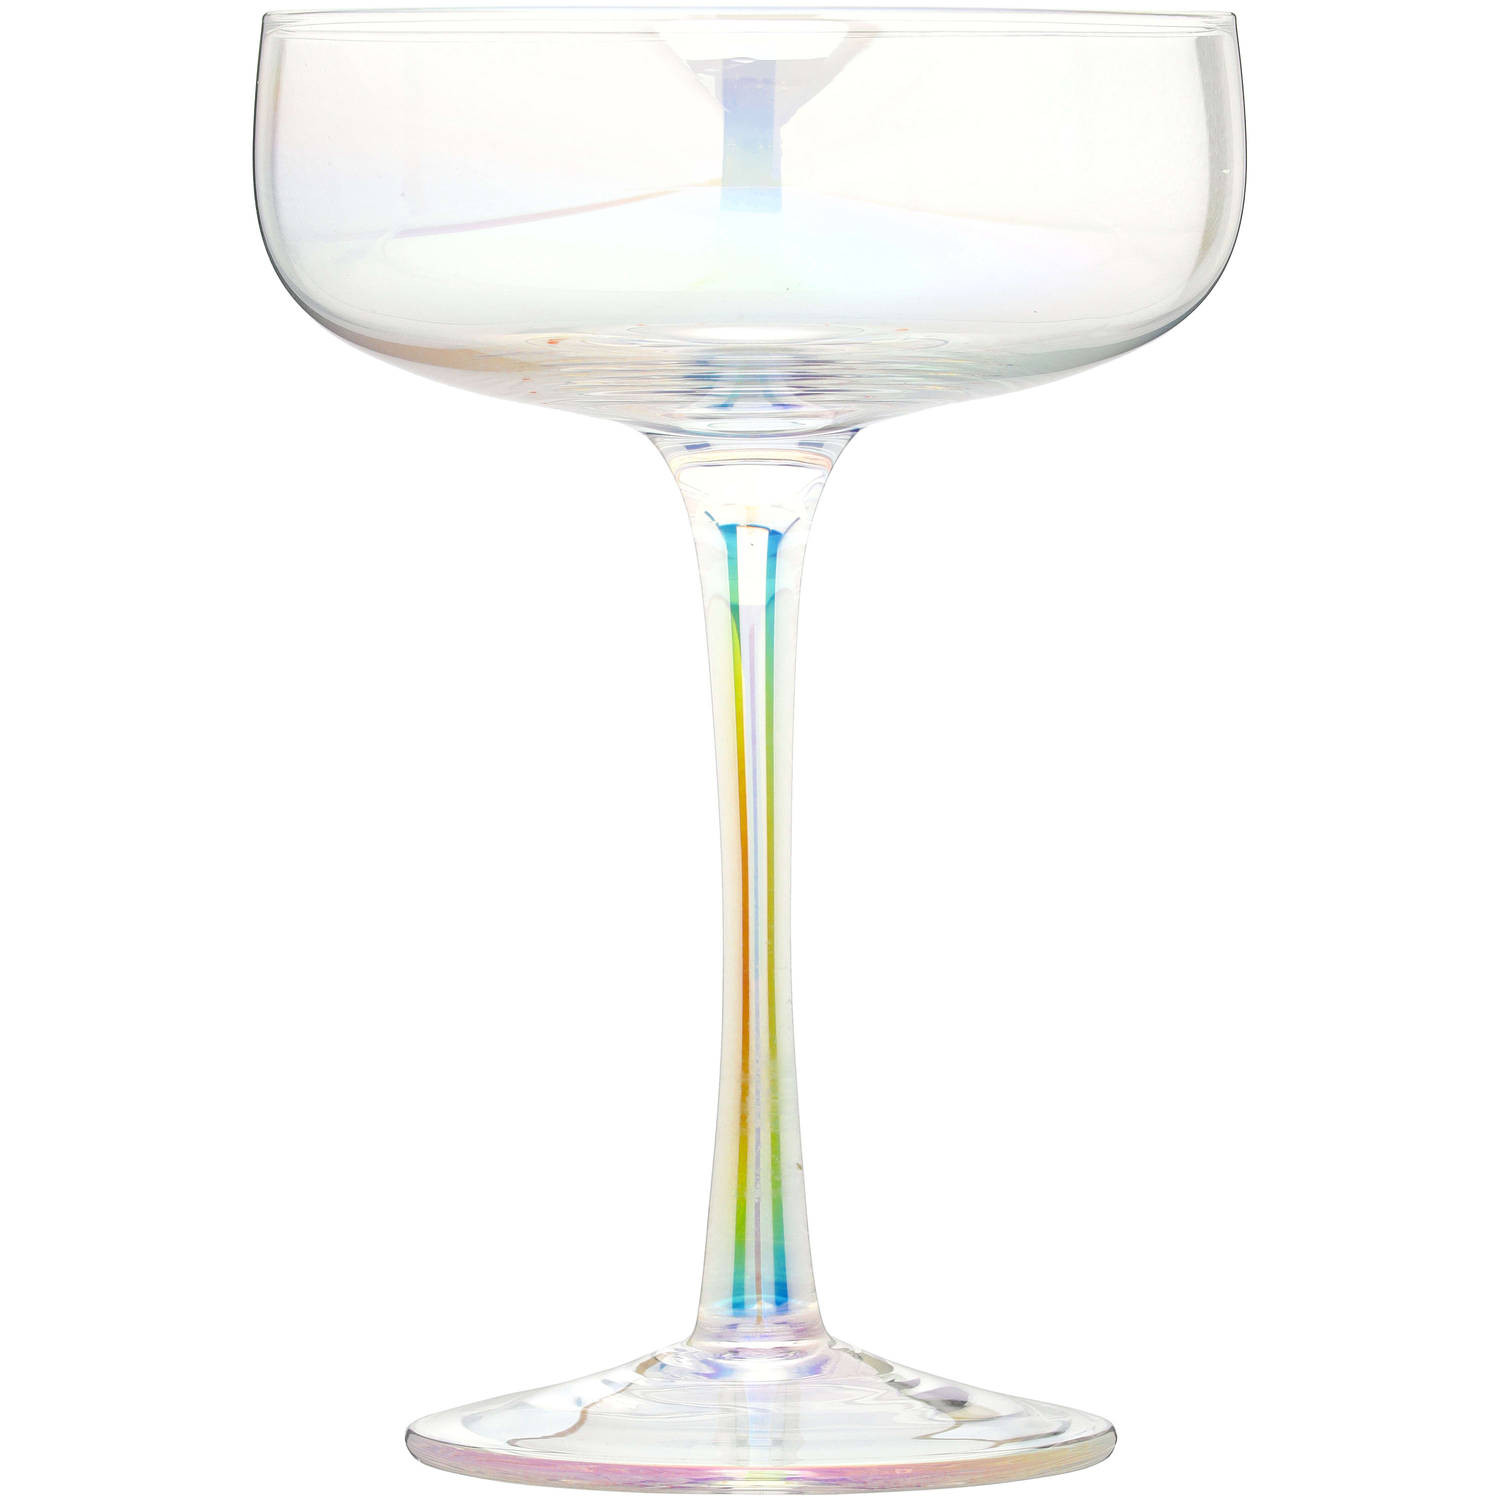 Blokker Soft Shades coupe glas iriserend - 26cl